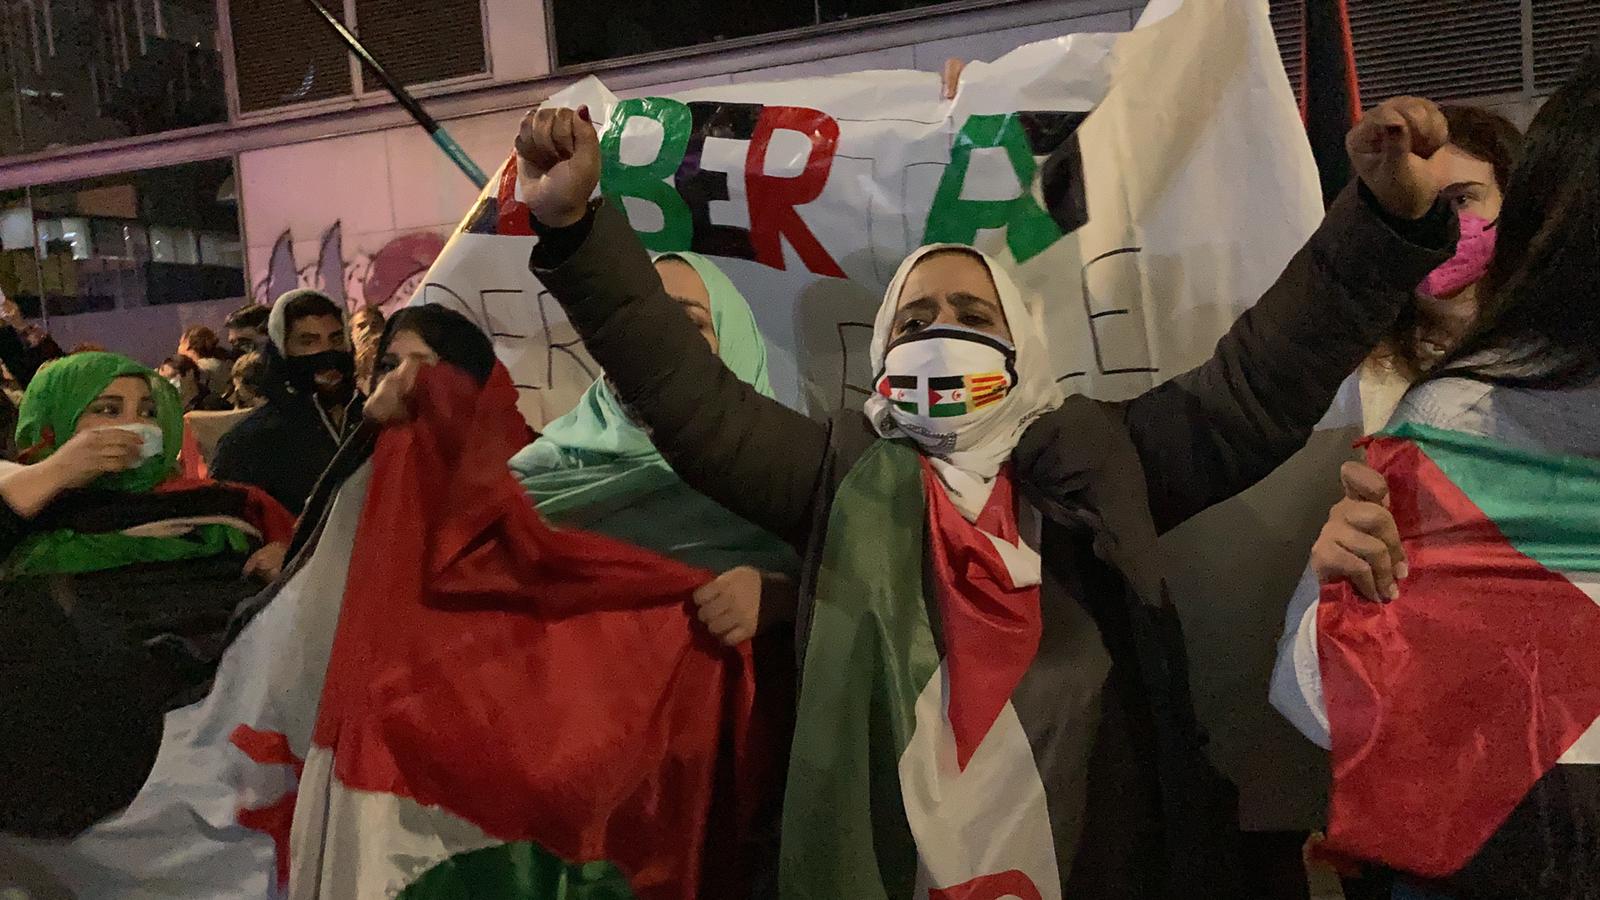 Sahrawi protesters outside the Moroccan consulate in Barcelona, November 18, 2020 (by Alan Ruiz Terol)